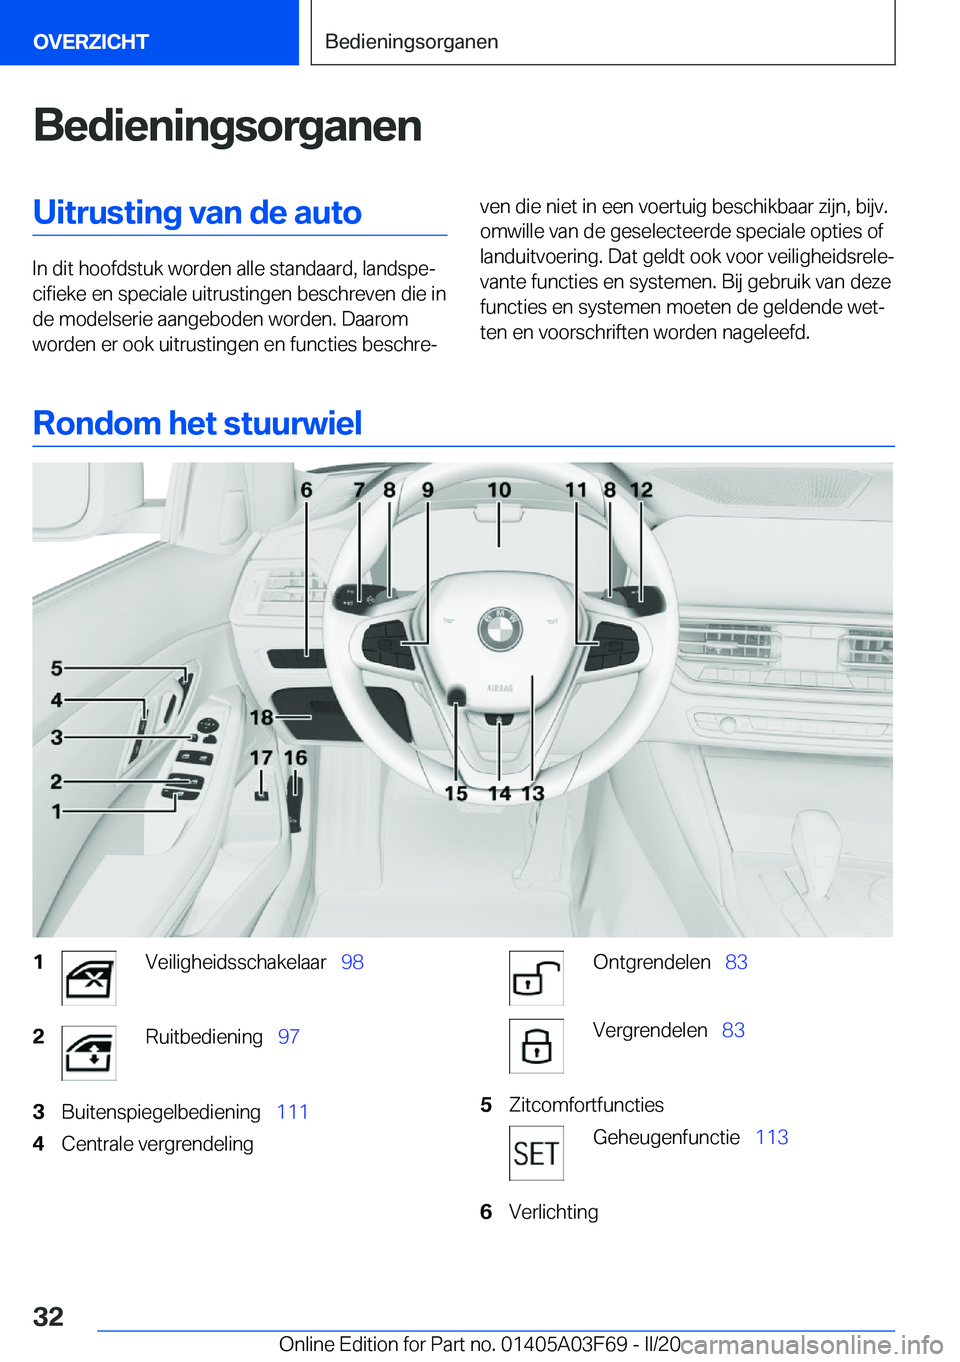 BMW 3 SERIES 2020  Instructieboekjes (in Dutch) �B�e�d�i�e�n�i�n�g�s�o�r�g�a�n�e�n�U�i�t�r�u�s�t�i�n�g��v�a�n��d�e��a�u�t�o
�I�n��d�i�t��h�o�o�f�d�s�t�u�k��w�o�r�d�e�n��a�l�l�e��s�t�a�n�d�a�a�r�d�,��l�a�n�d�s�p�ej�c�i�f�i�e�k�e��e�n��s�